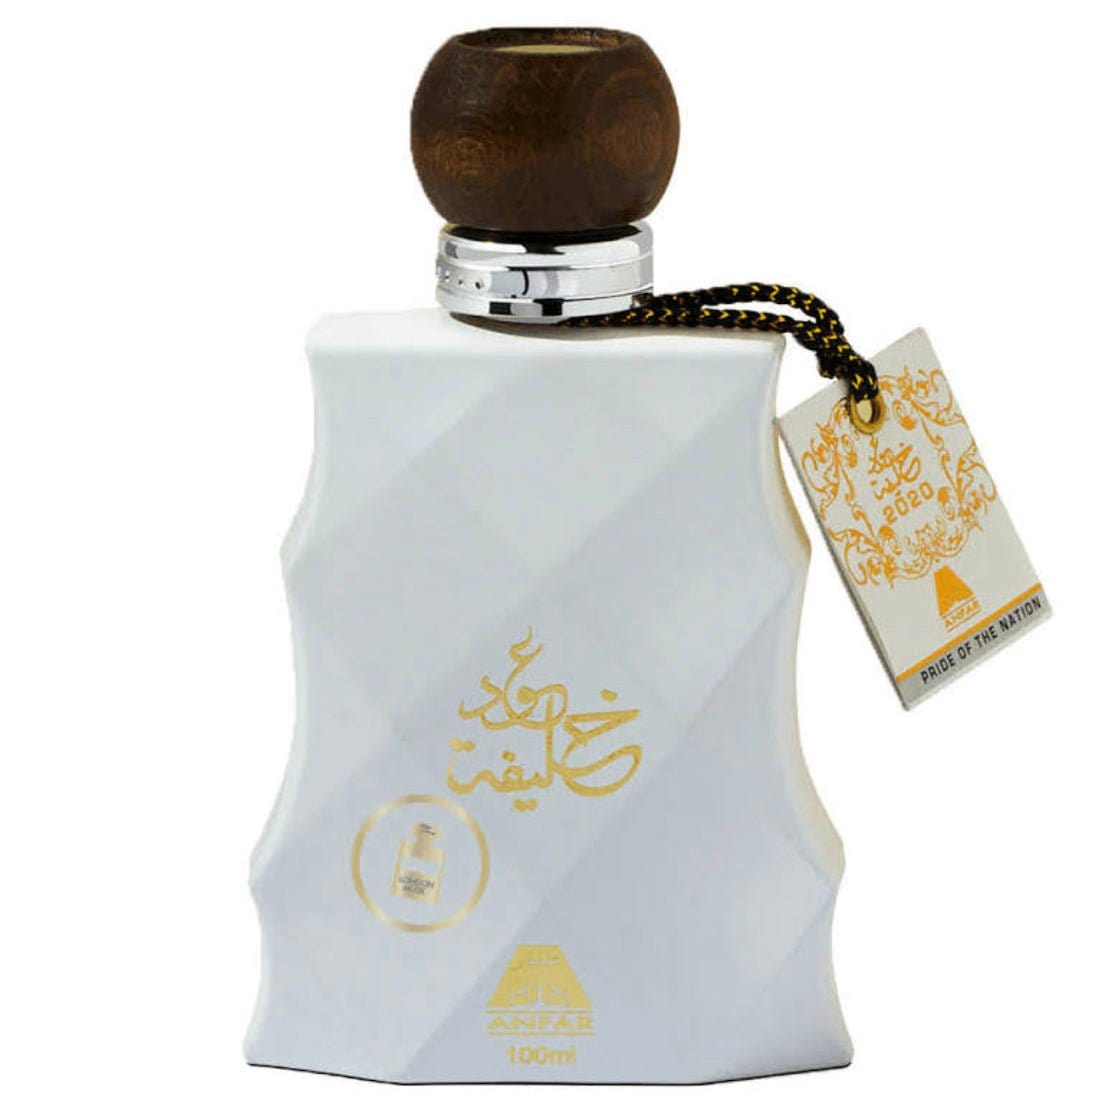 mysamu.co.uk ARABIC PERFUME Oudh khalifa 100ml White Spray Eau De Parfum